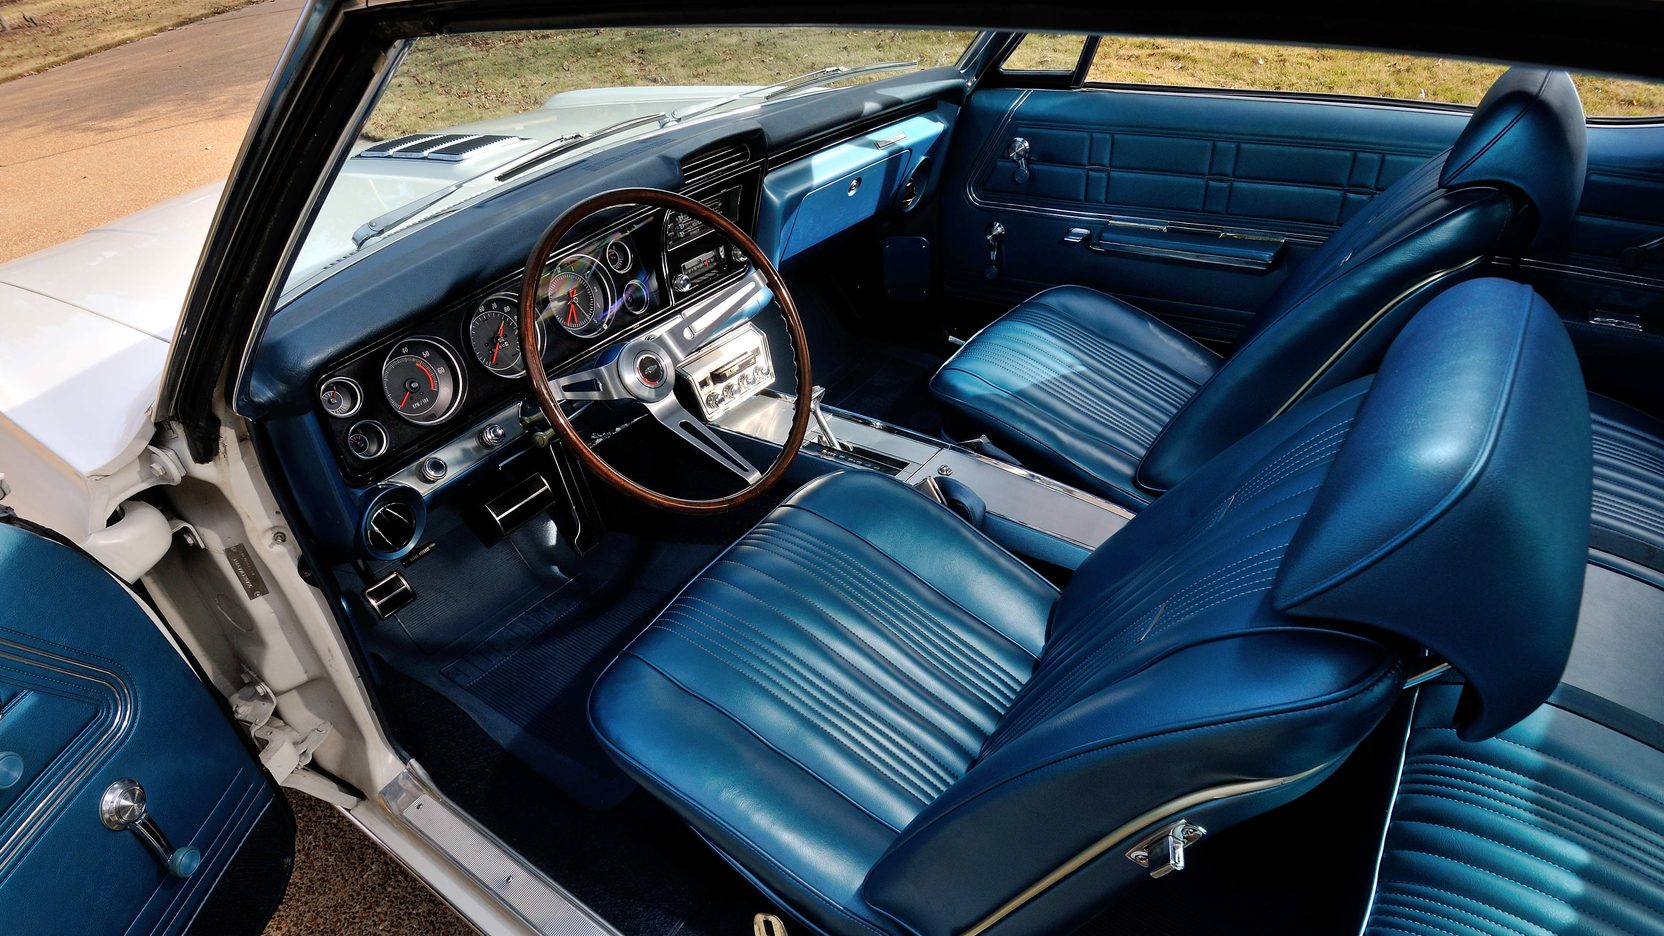 1967 Chevrolet Impala SS Hardtop S178 Киссимми 2014 авто 20-го века Постила...